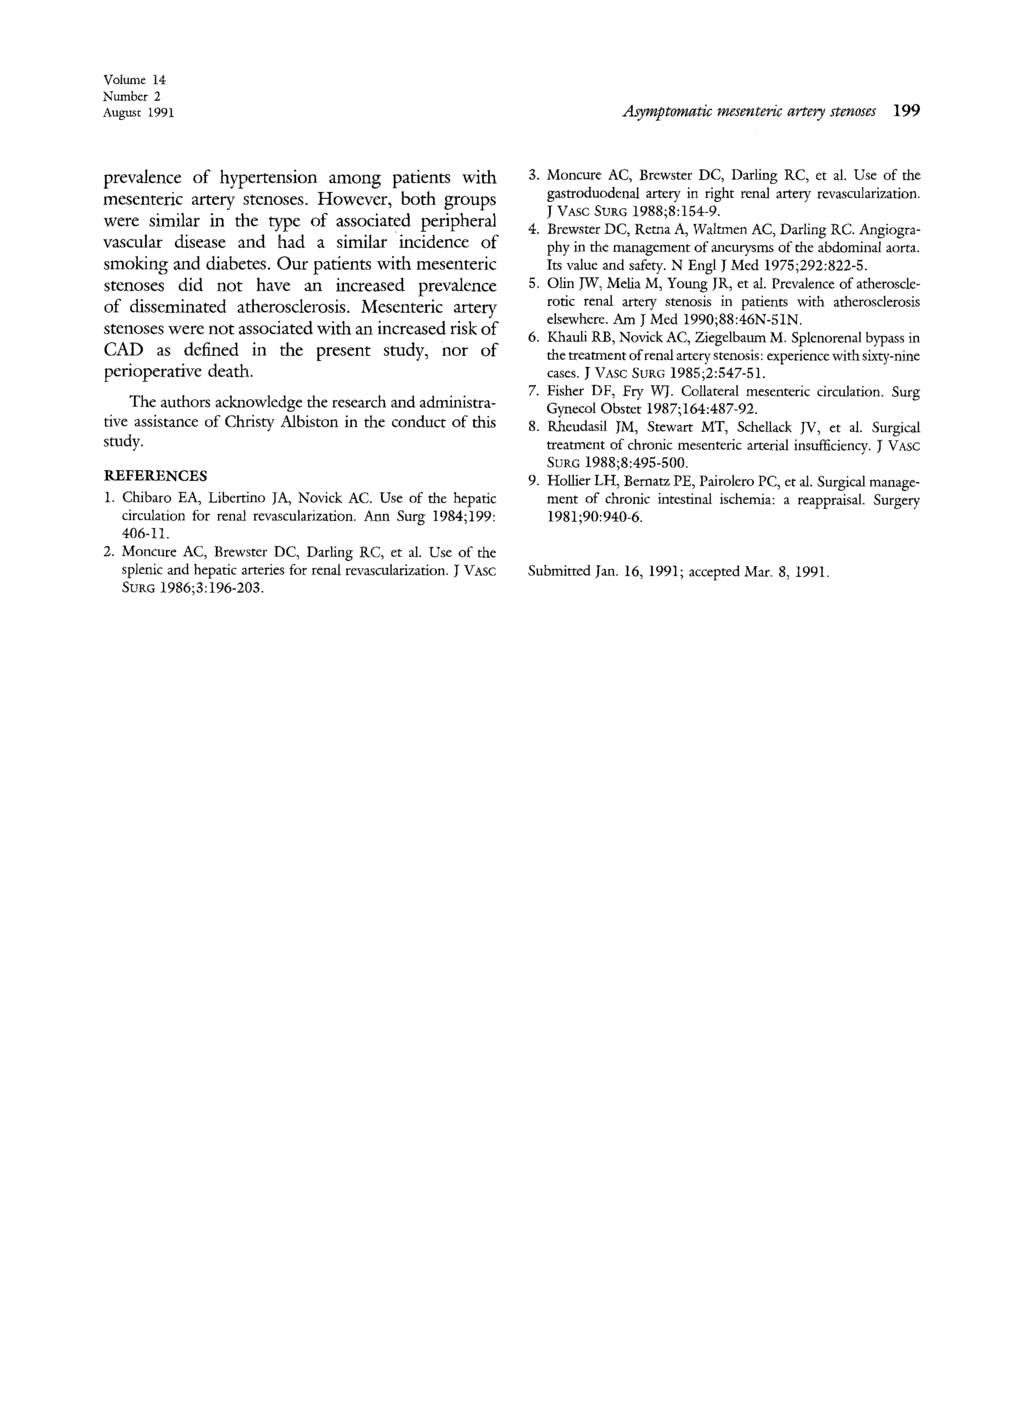 Volume 14 Number 2 August 1991 Asymptomatic mesenteric artery stenoses 199 prevalence of hypertension among patients with mesenteric artery stenoses.